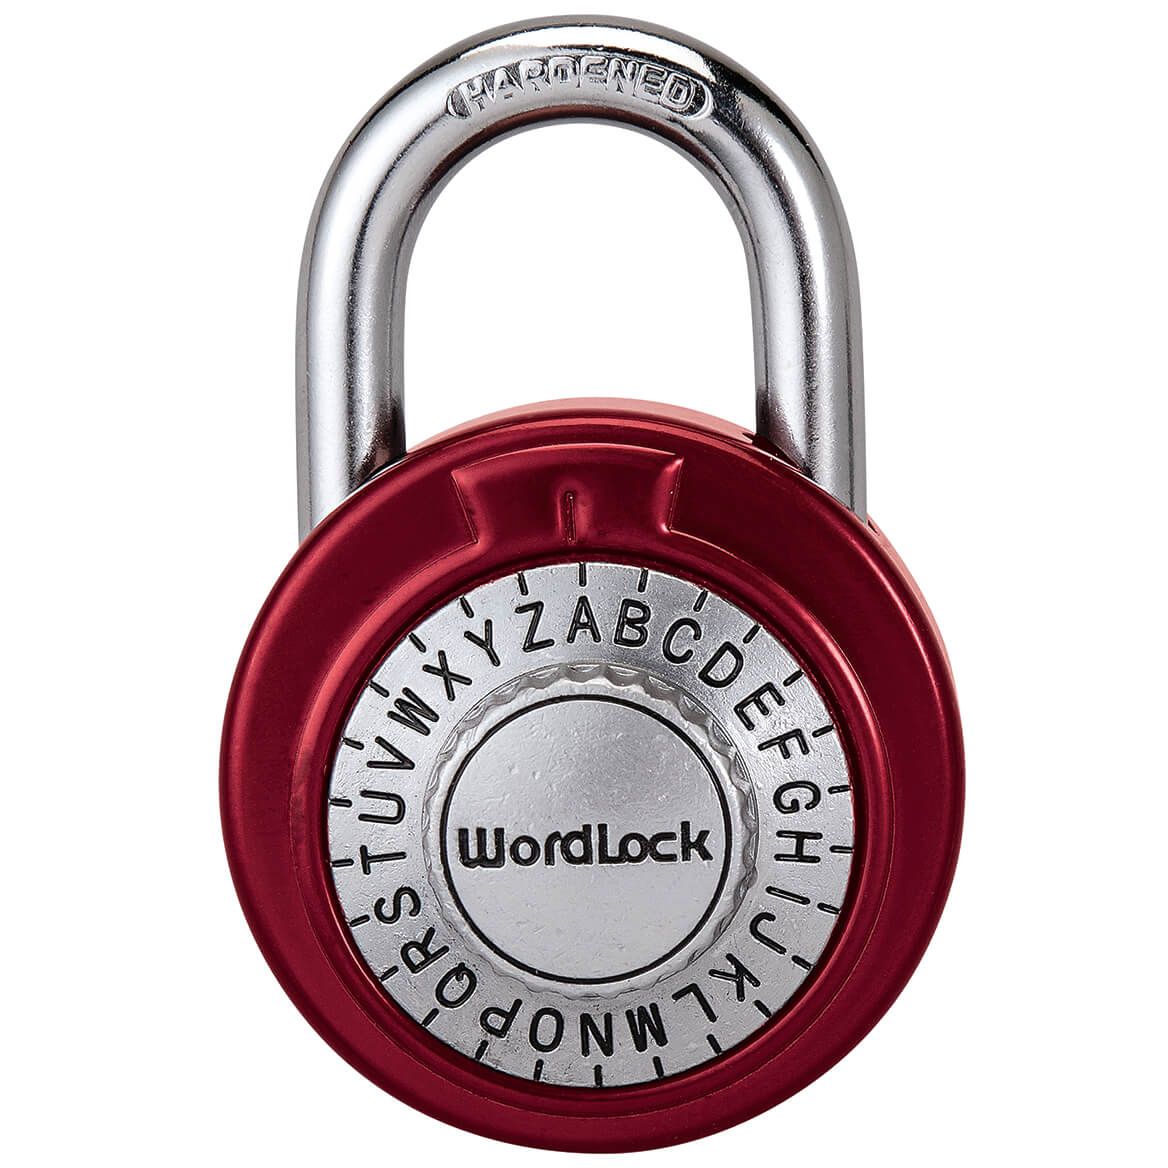 WordLock Combination Locks + '-' + 374168